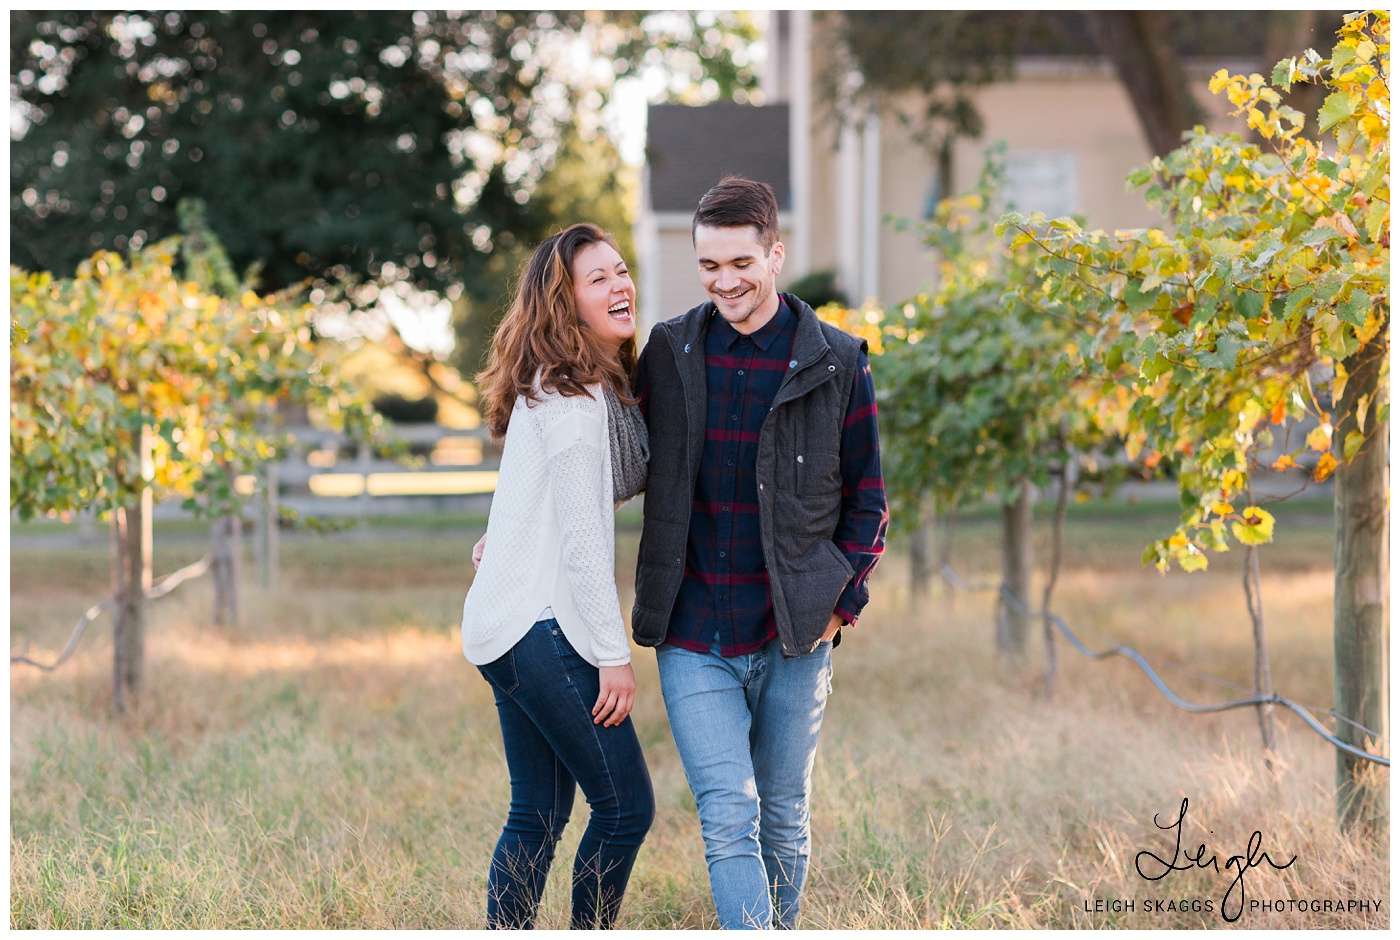 Melanie & Tyler | Windsor Castle Park Engagement session